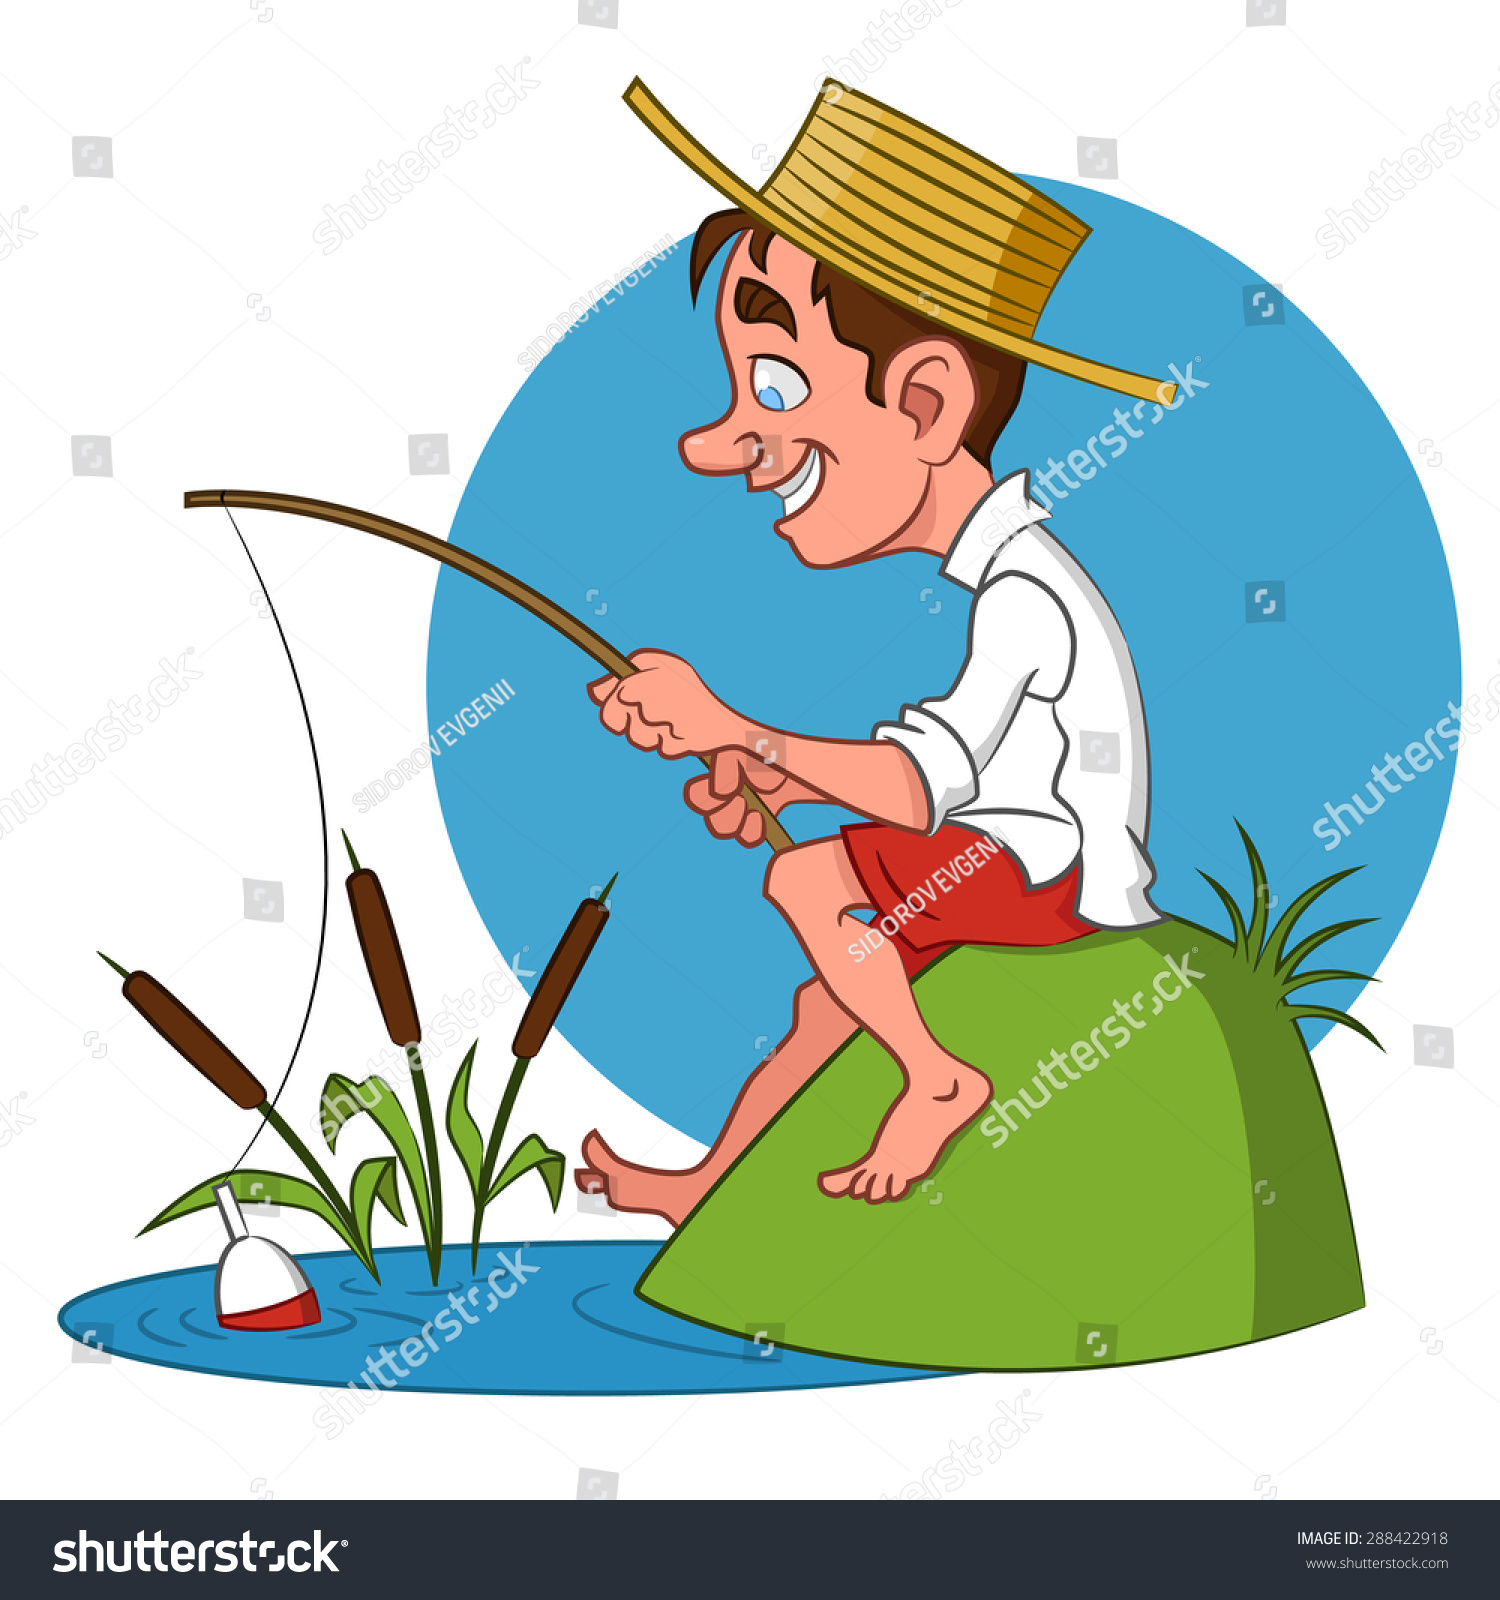 Fisherman. Vector Illustration. - 288422918 : Shutterstock